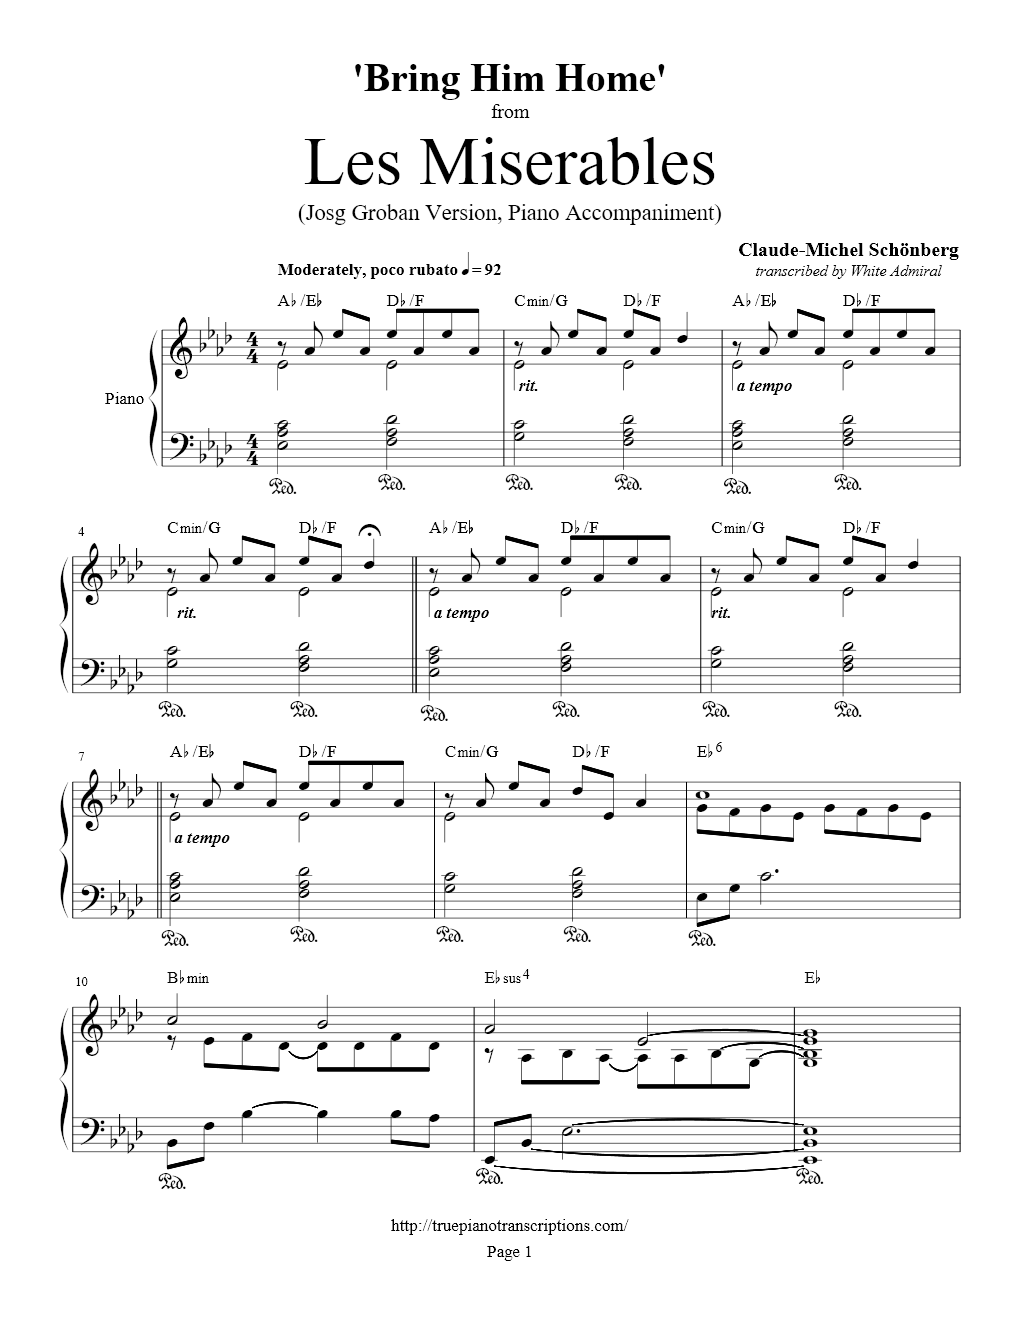 's score) les miserables by schonberg - full orchestra score.pdf